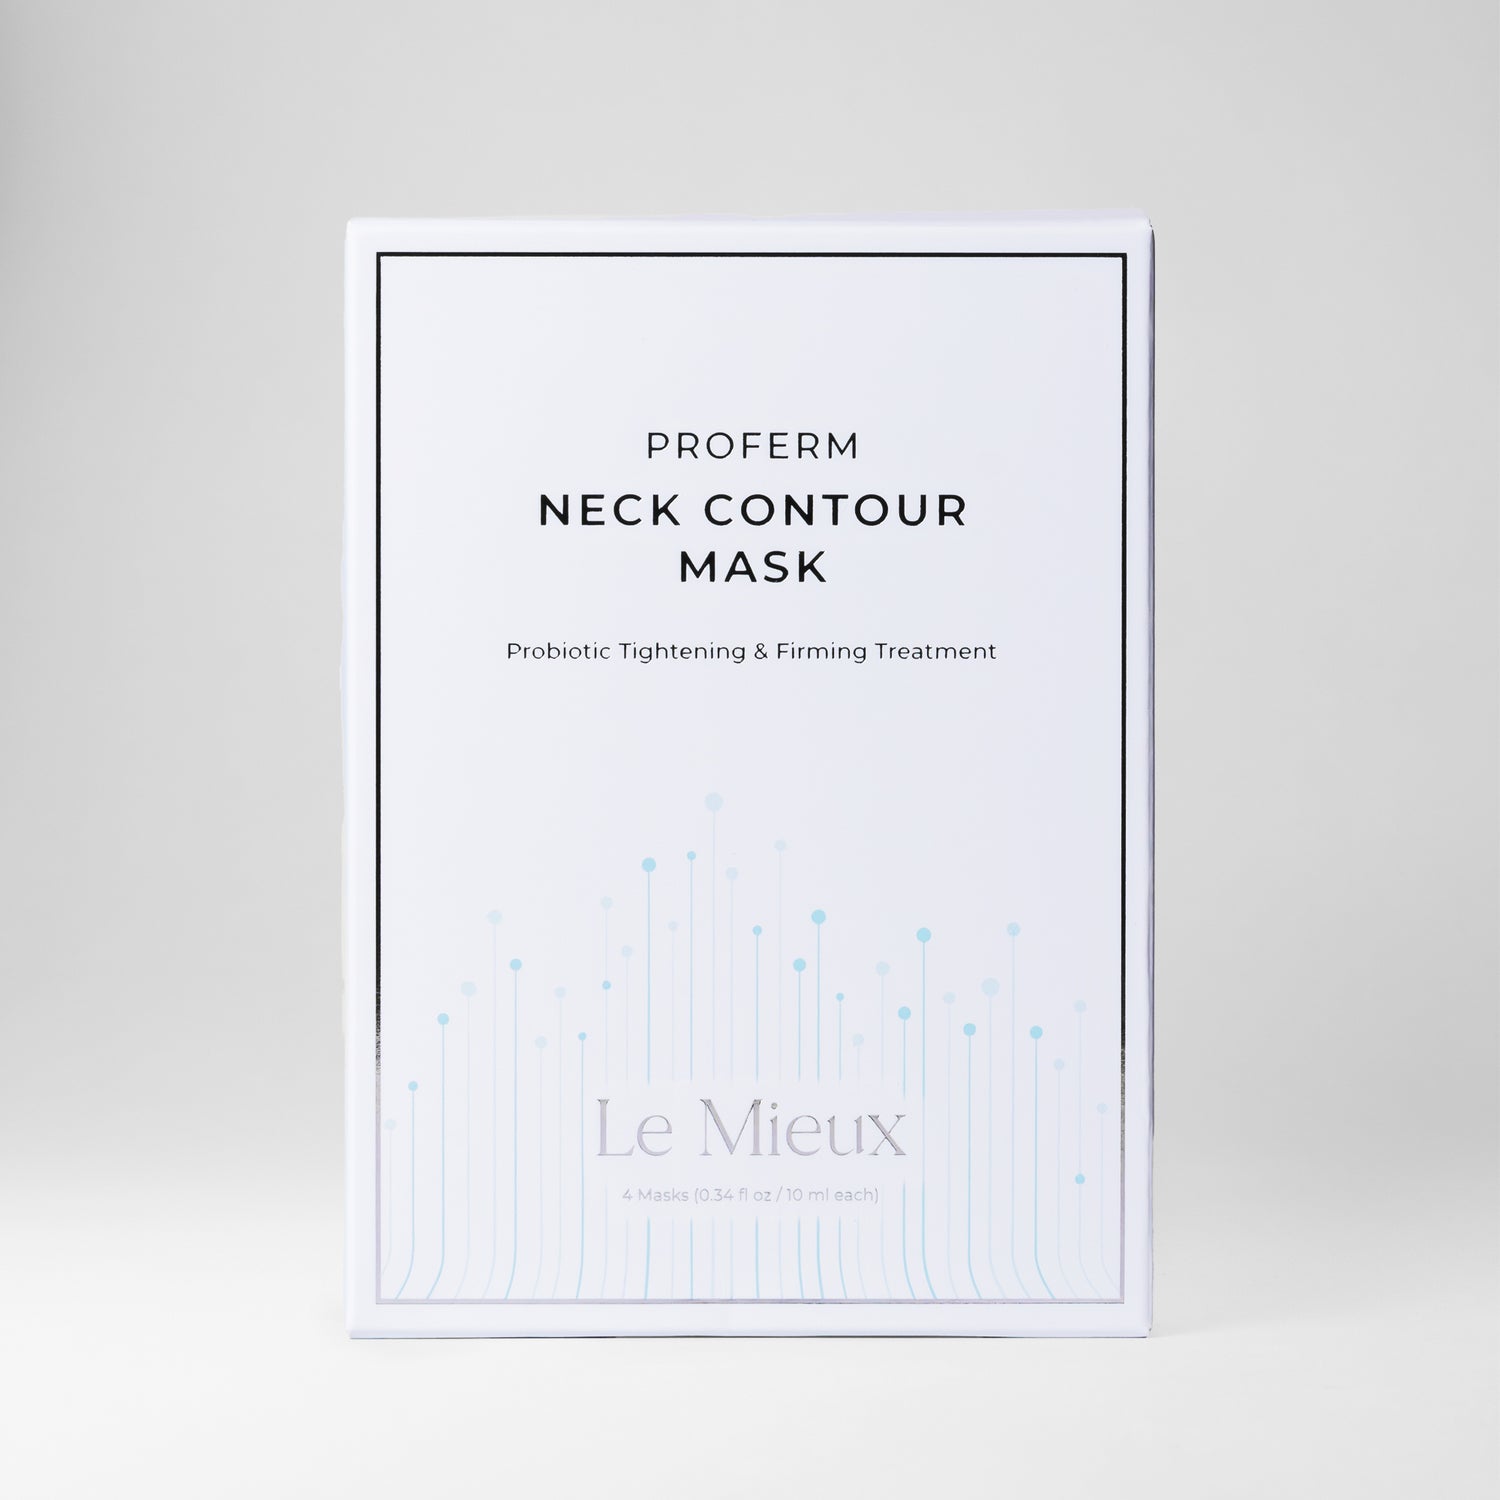  ProFerm Neck Contour Mask from Le Mieux Skincare - featured